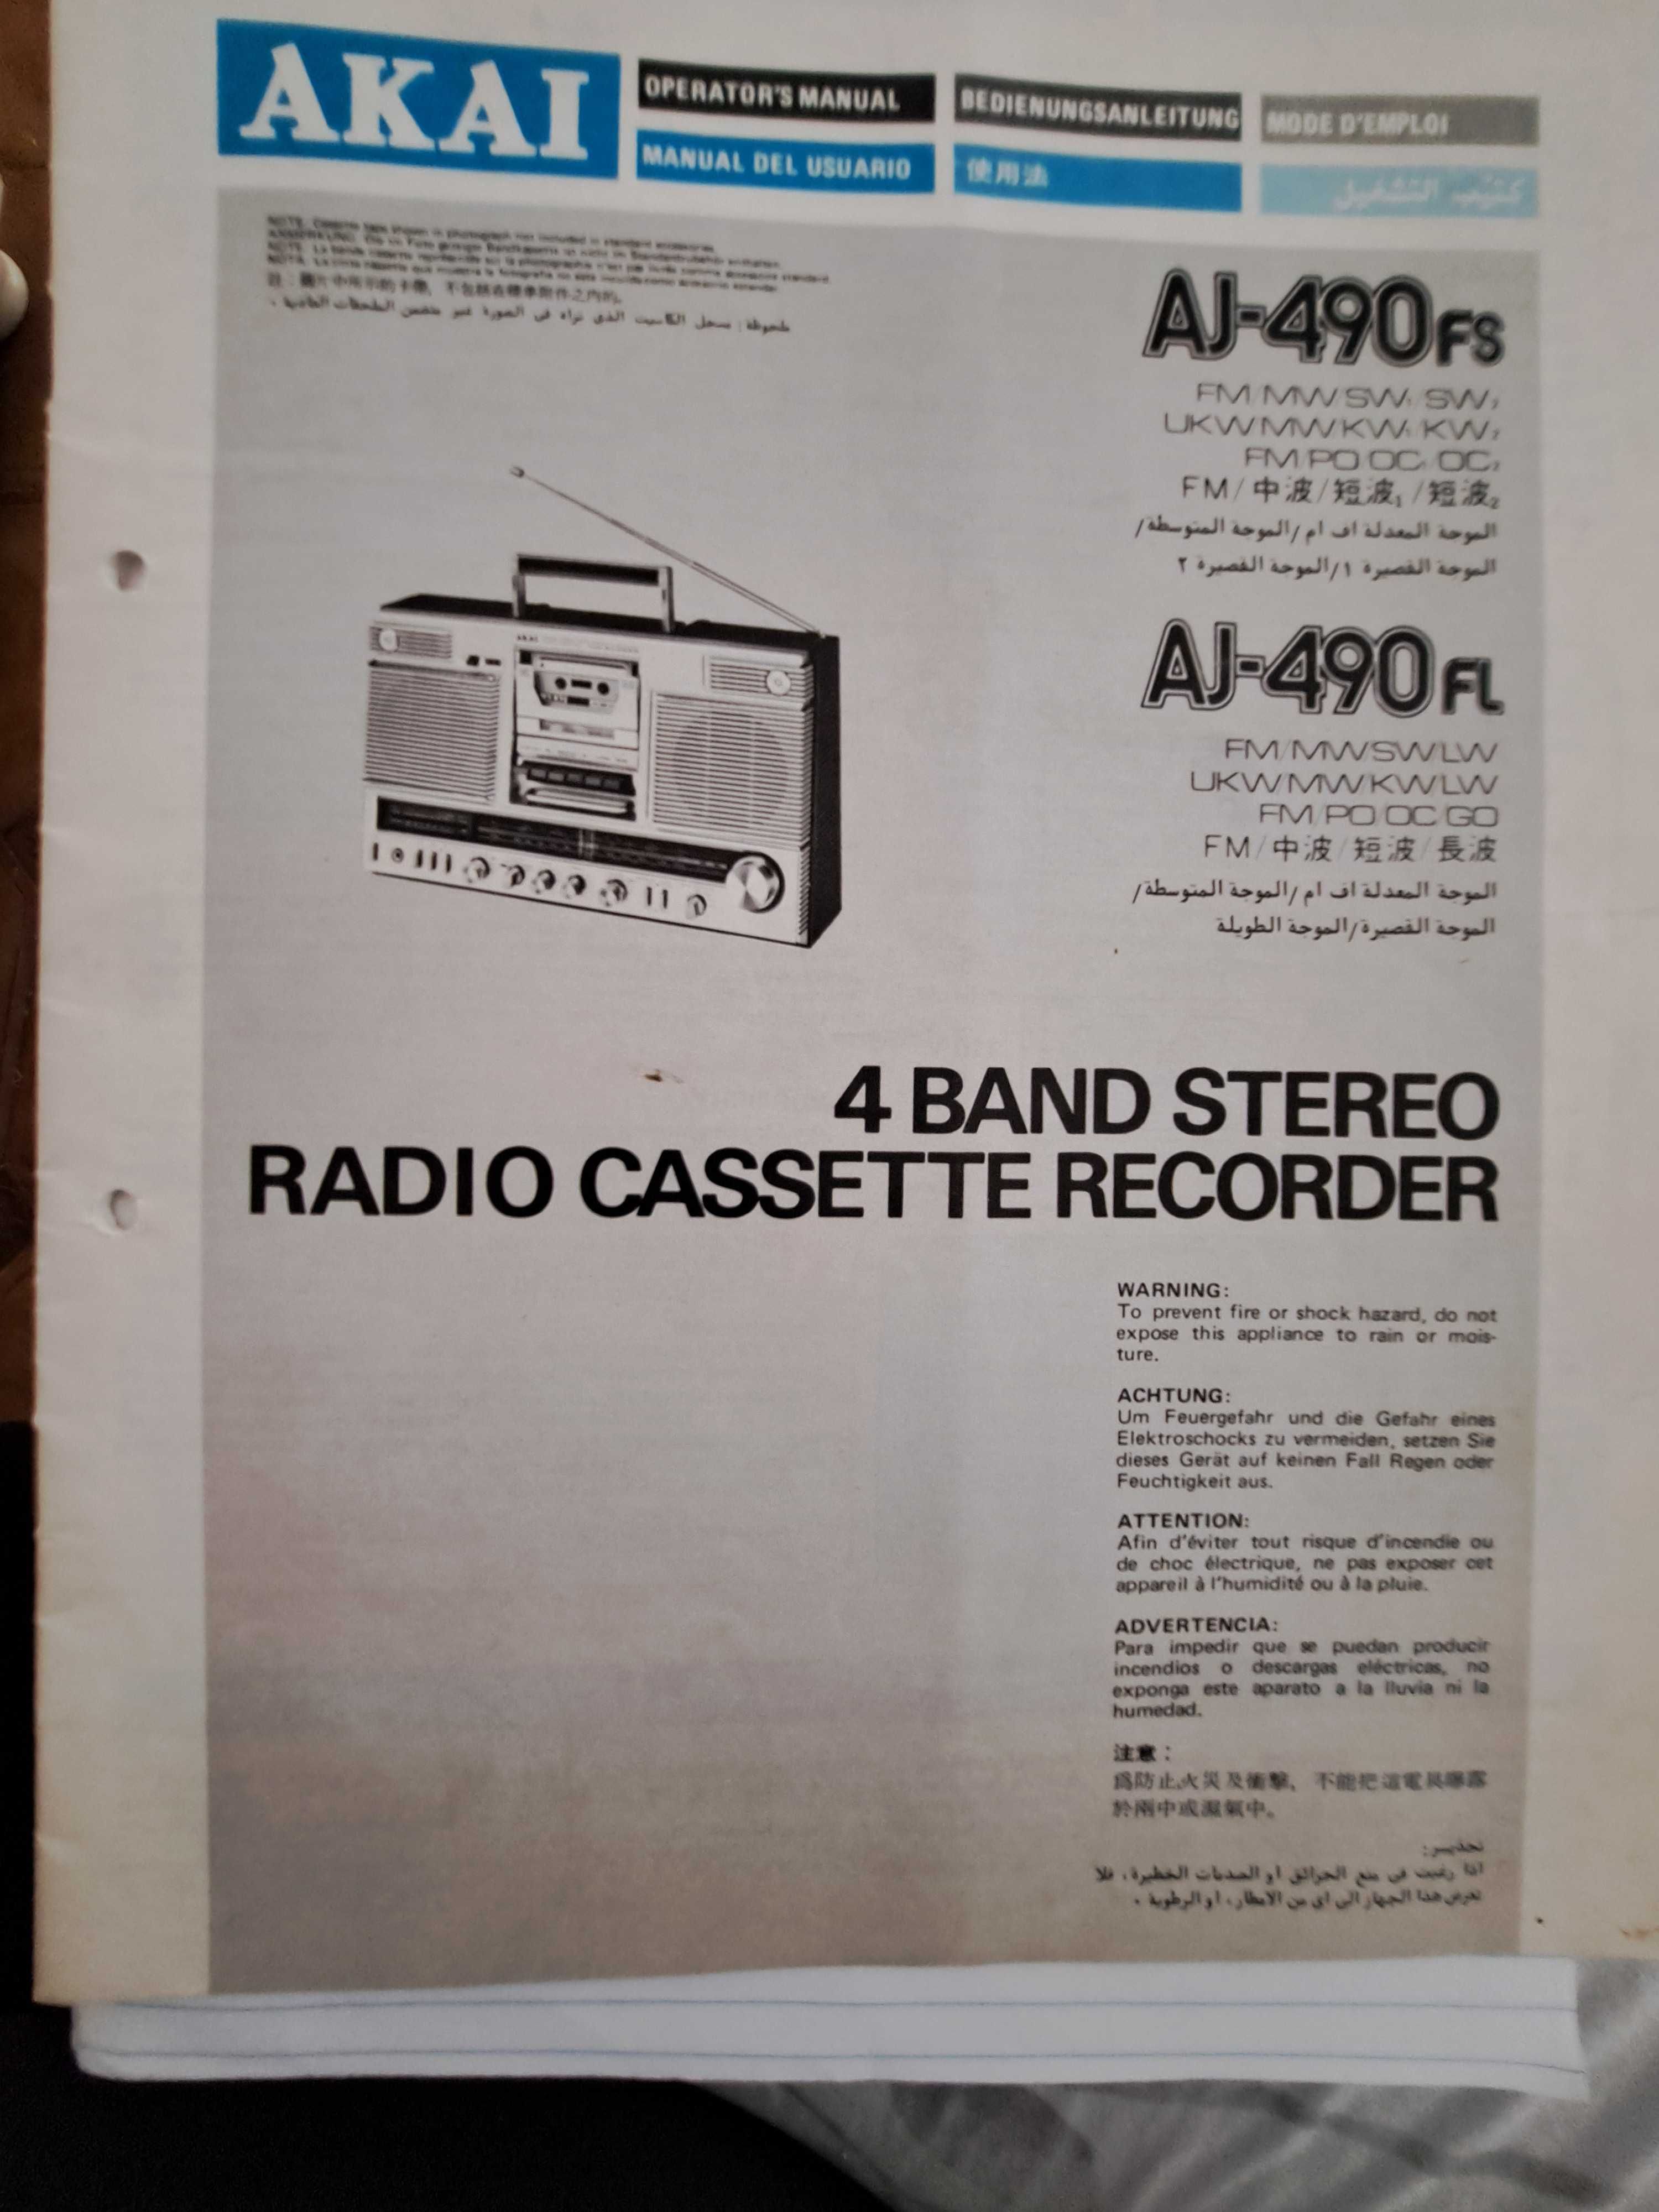 Manual Radio Casetofon Recorder AJ-490 fl